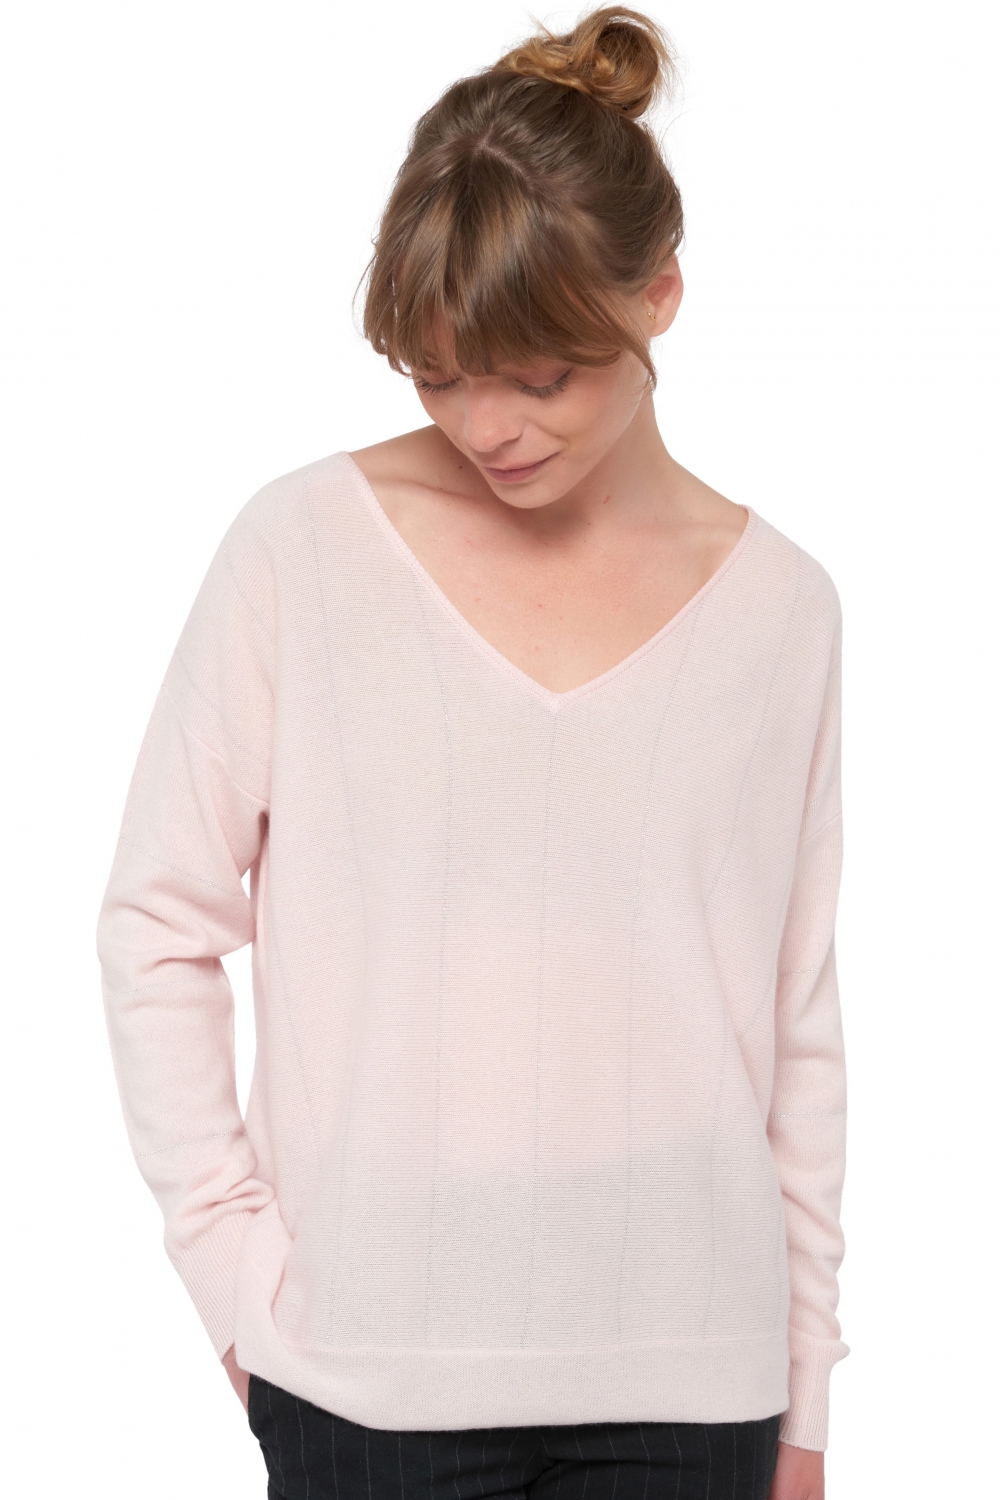 Cashmere ladies summertime sweaters widget shinking violet   blush s1